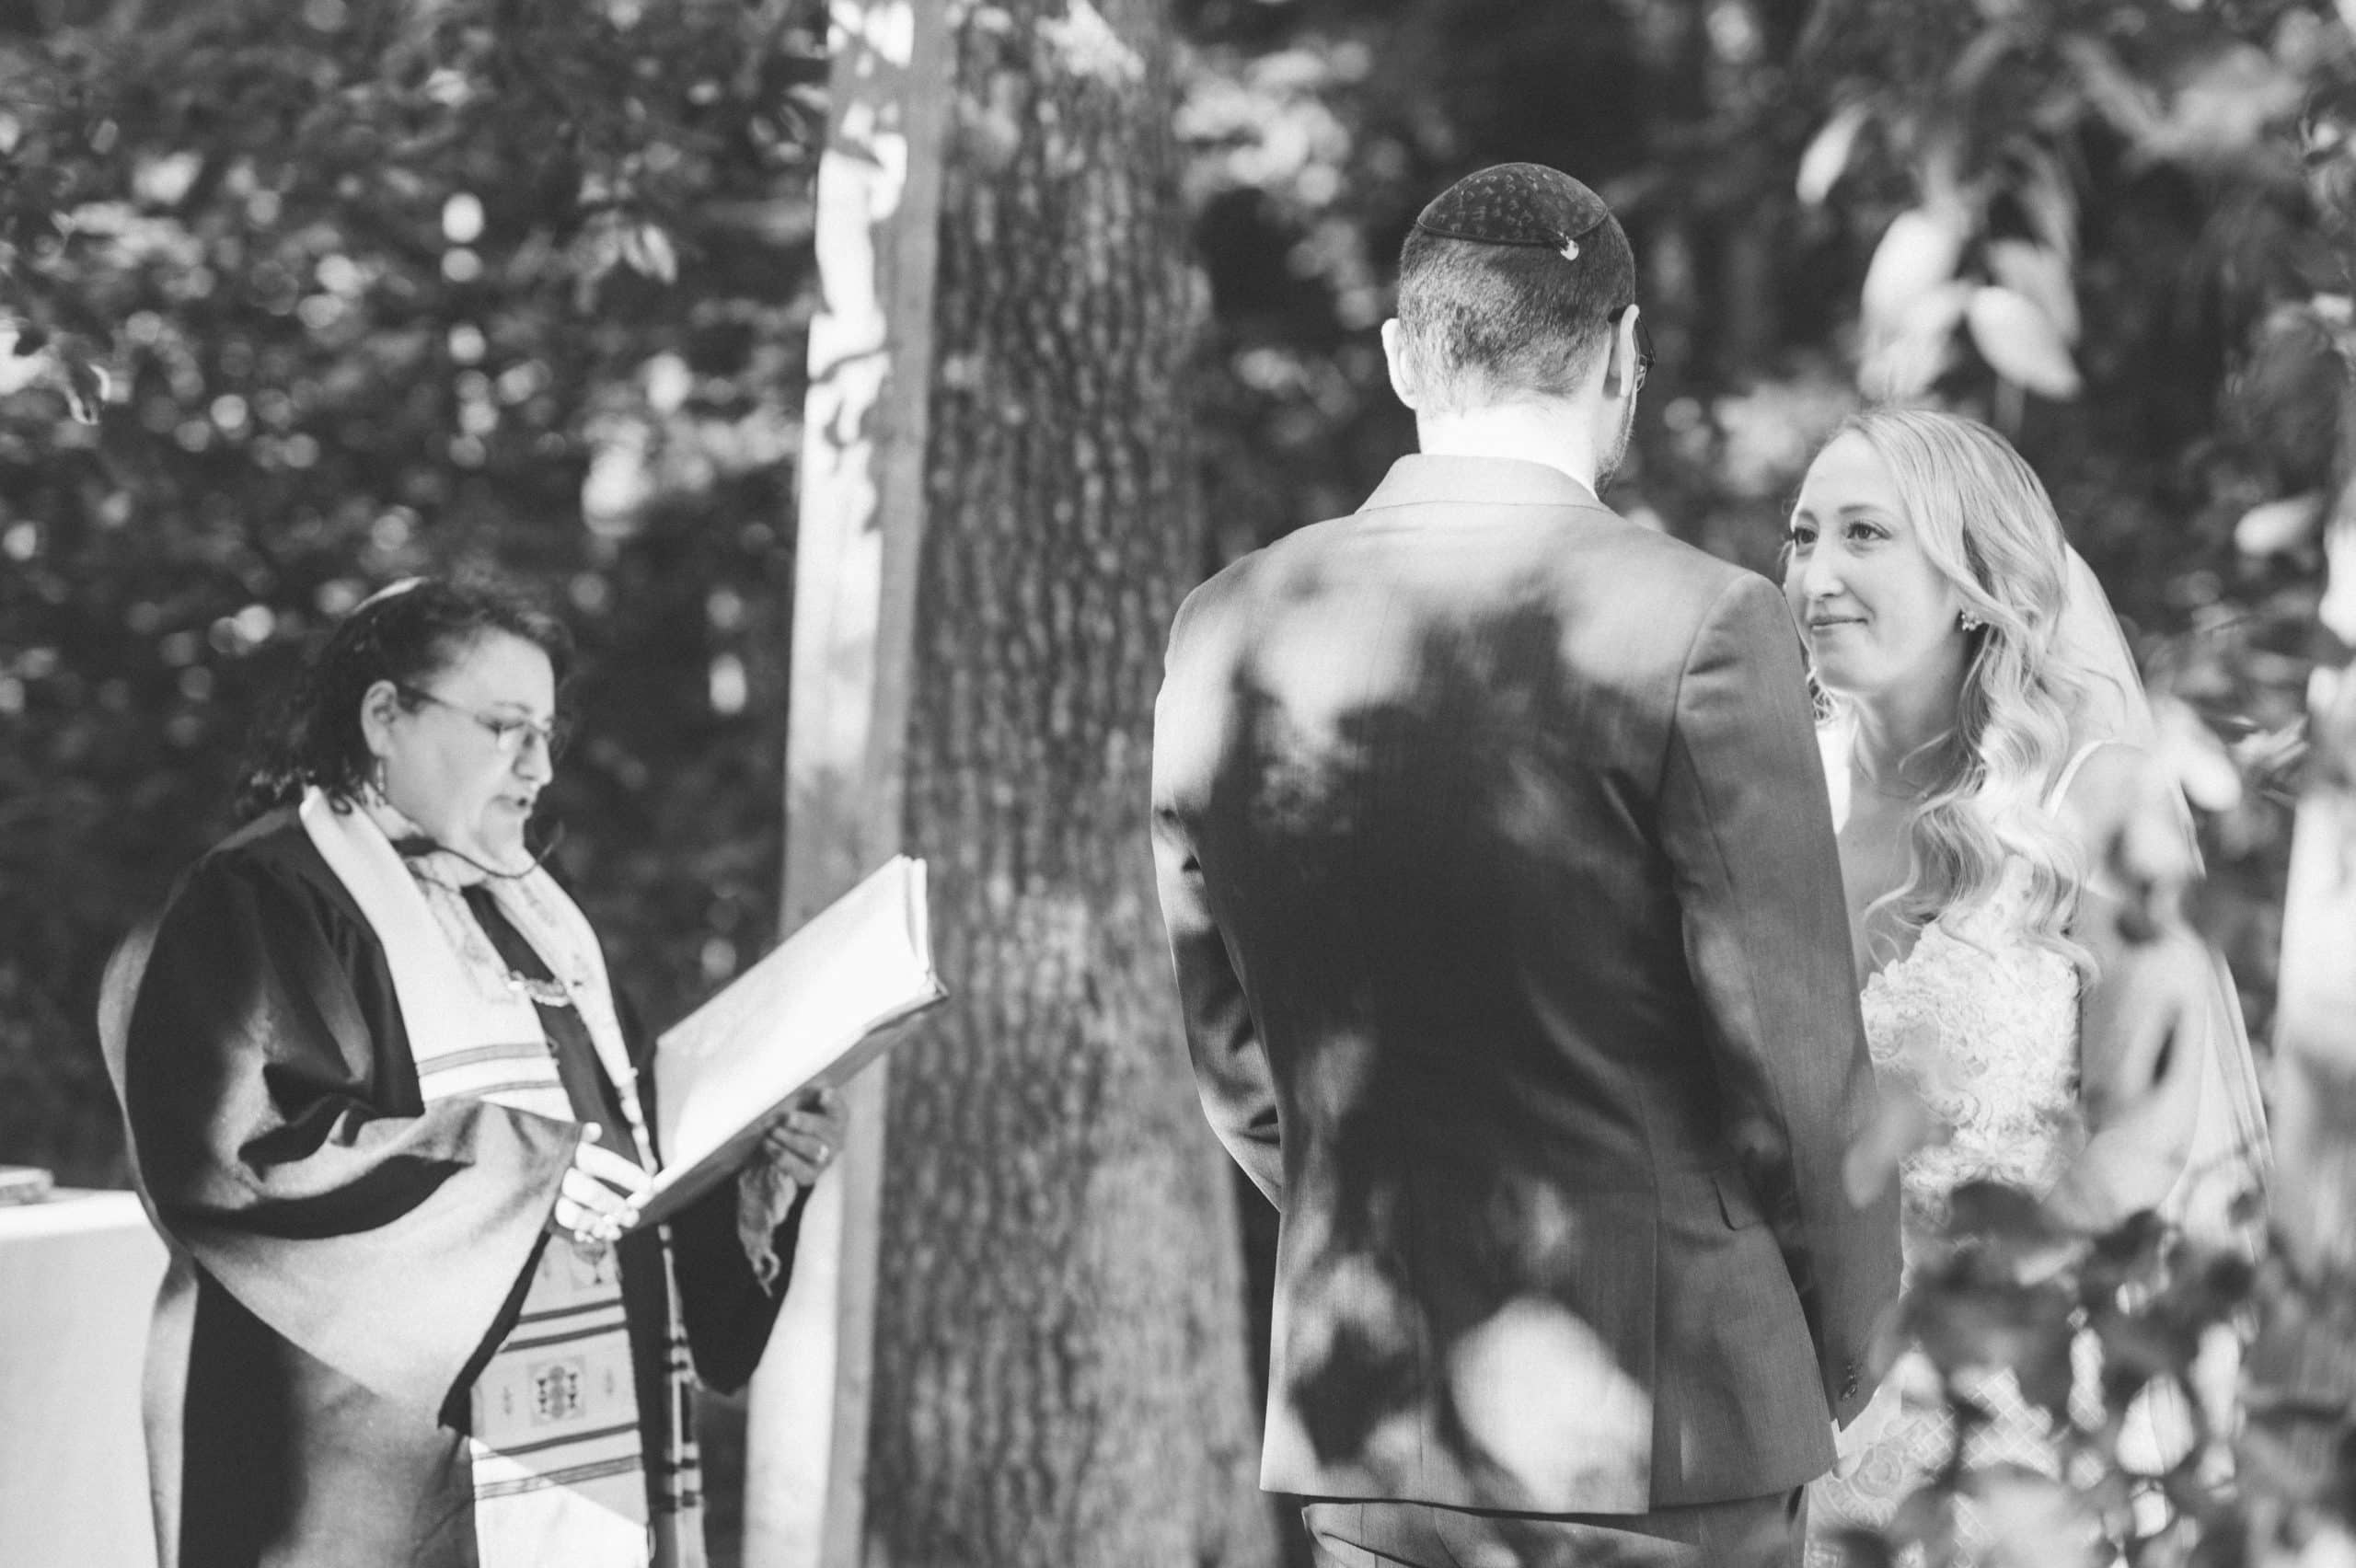 NJ COVID backyard wedding captured by NJ photo-documentary wedding photographer Ben Lau.